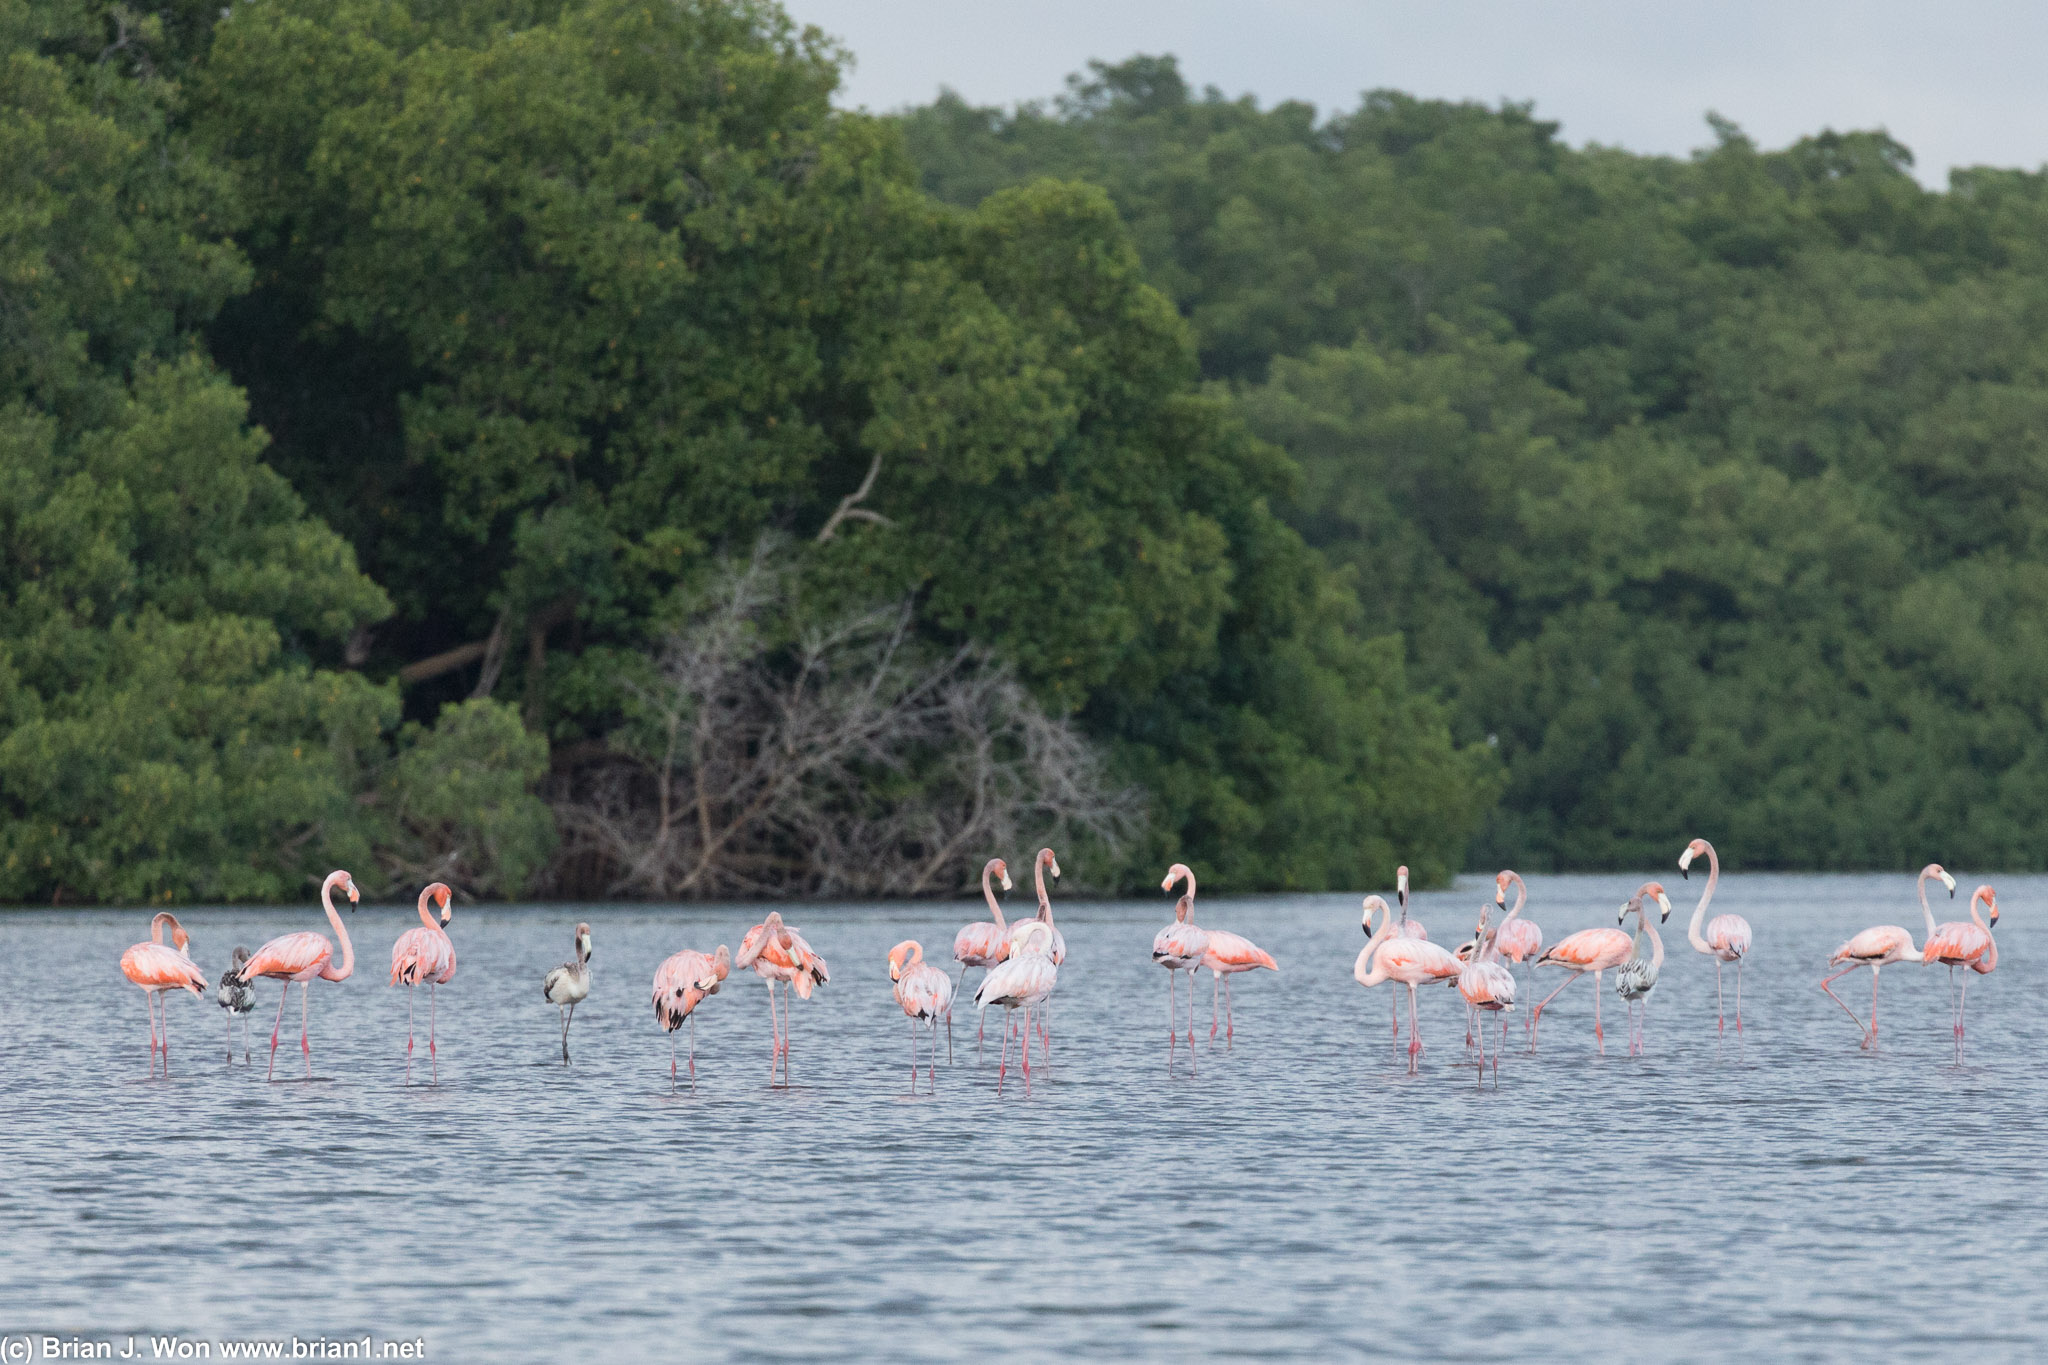 One last shot of flamingos.